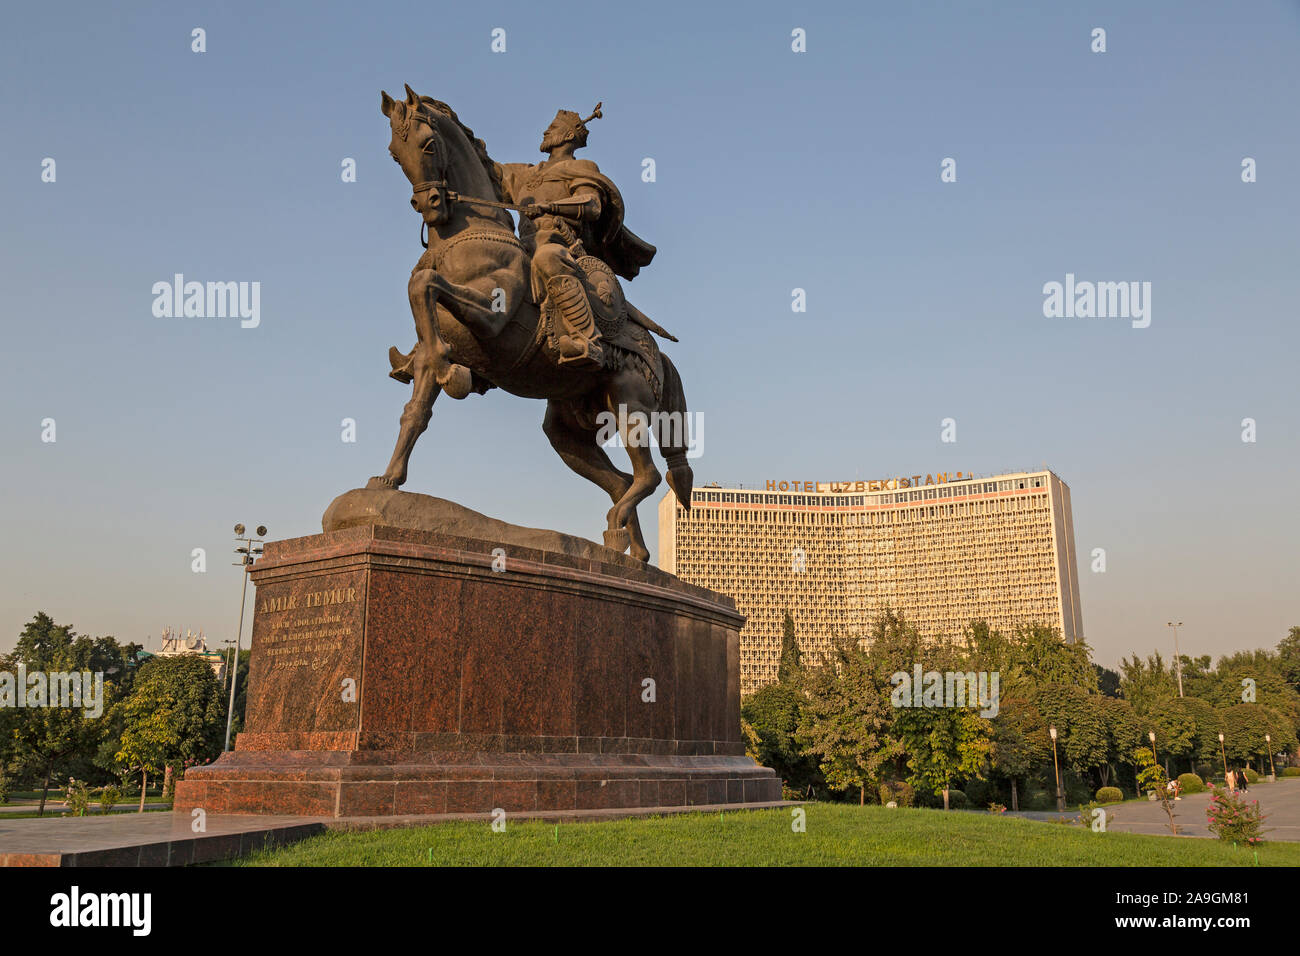 Amir Timur Square. The statue of Amir Timur in from of the Hotel Uzbekistan in Tashkent, Uzbekistan. Stock Photo